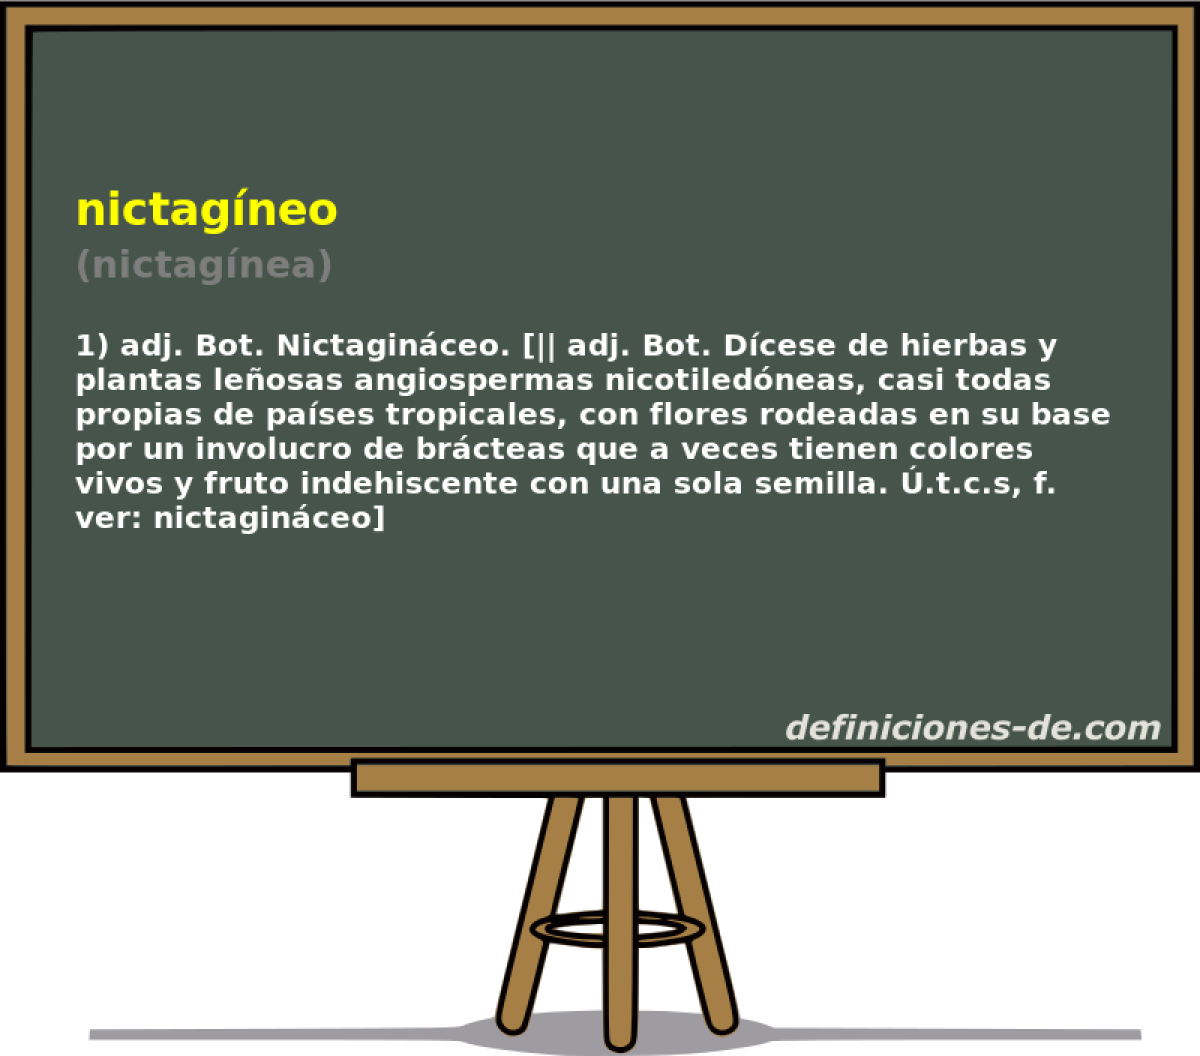 nictagneo (nictagnea)